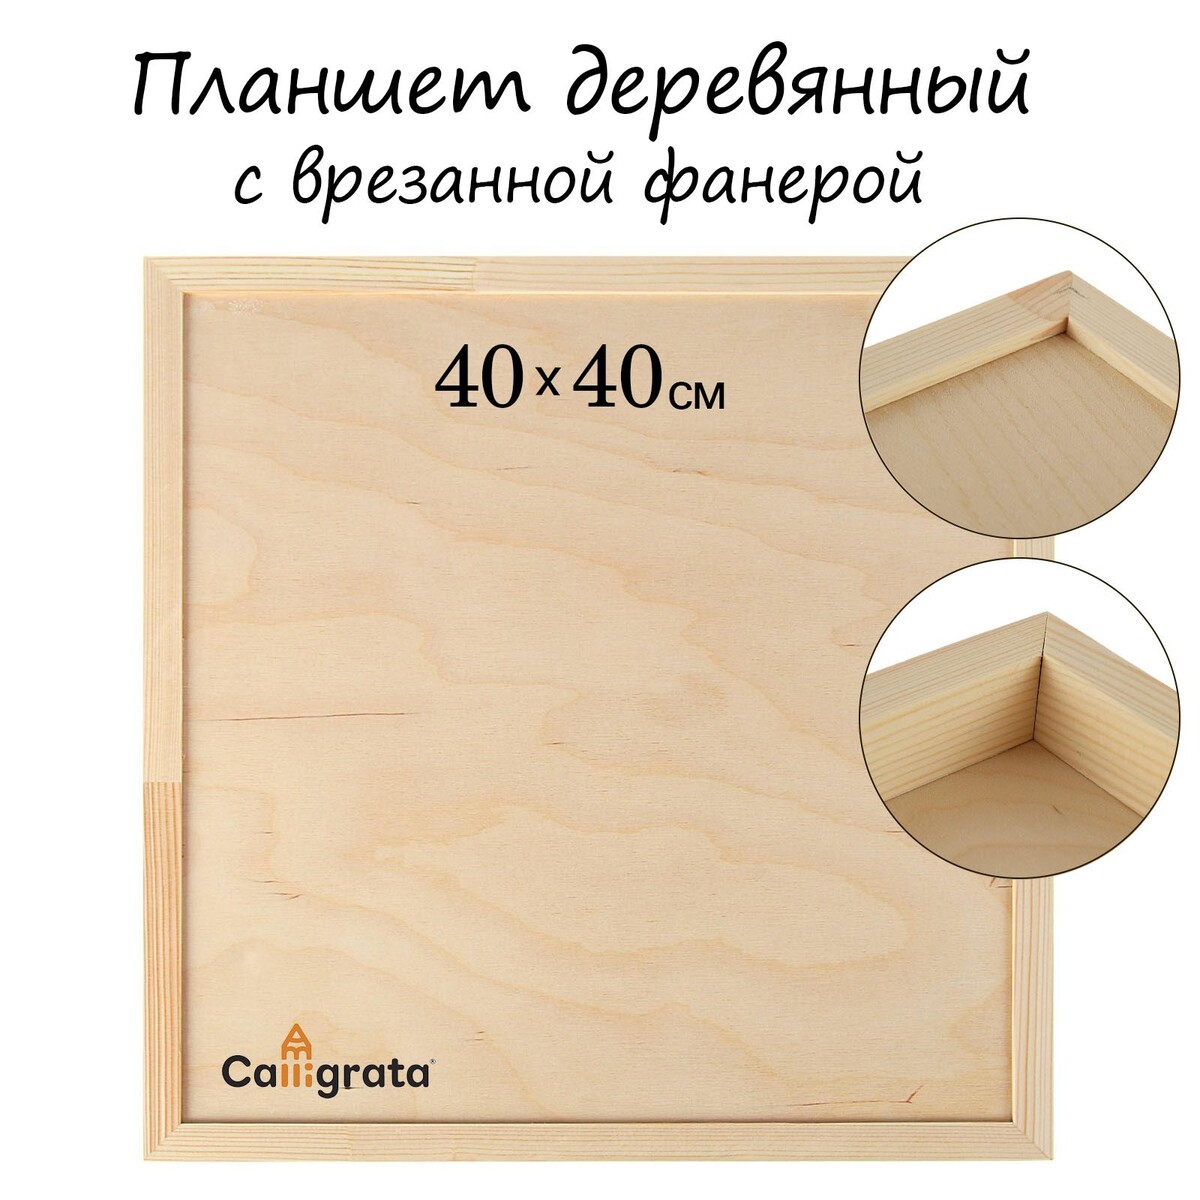 Планшет деревянный, с врезанной фанерой, 40 х 40 х 3,5 см, глубина 0.5 см, сосна планшет деревянный 40 х 50 х 2 см двп